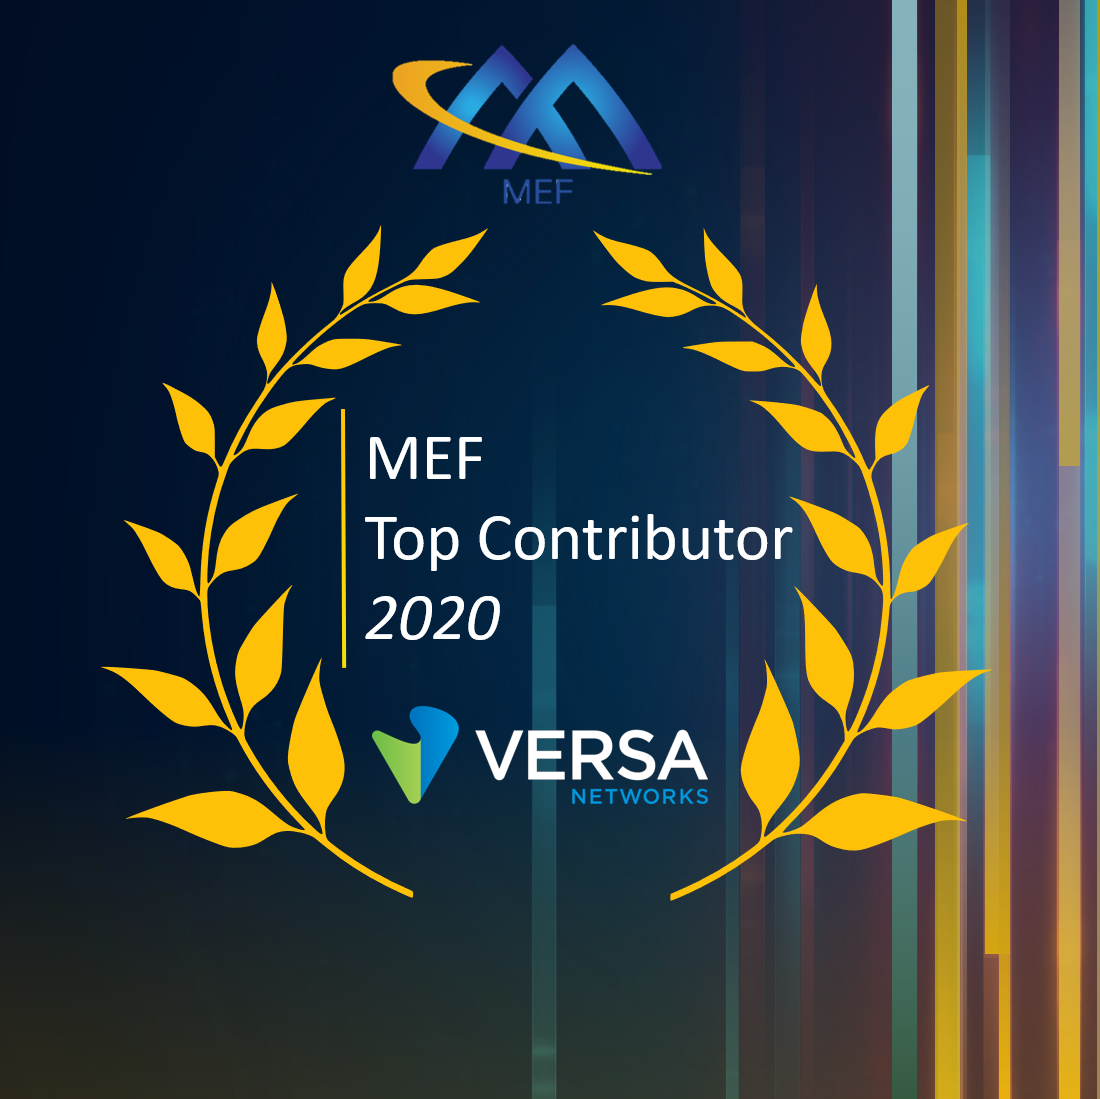 MEF Top Contributor 2020